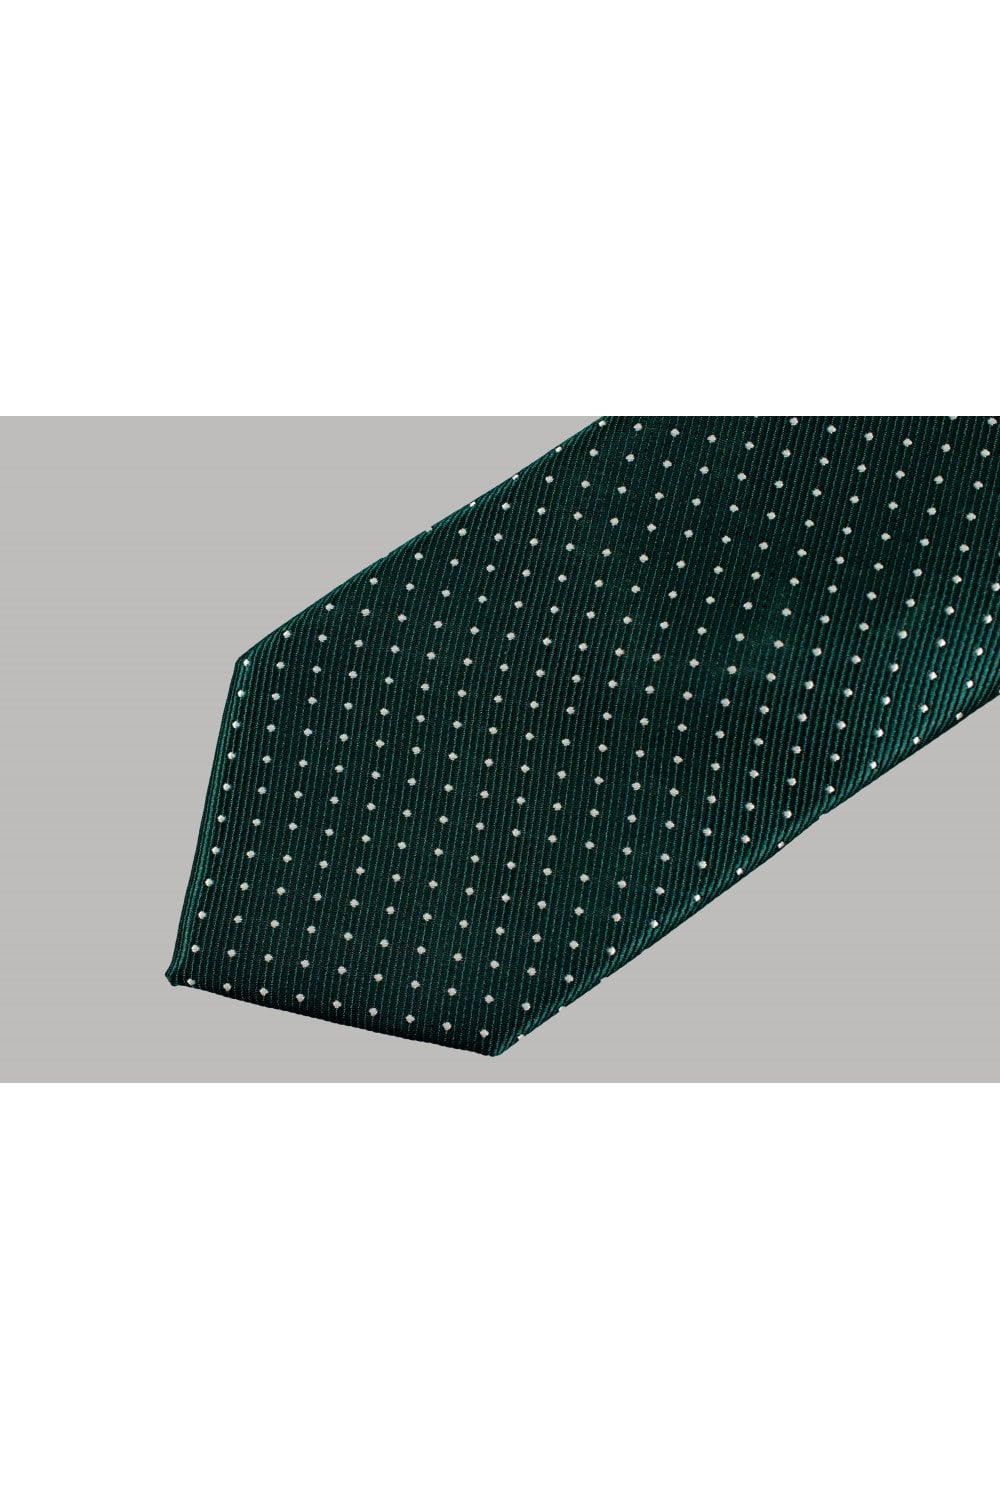 Krawatten - Set Olive Green Dots - Cavani - gentleman set